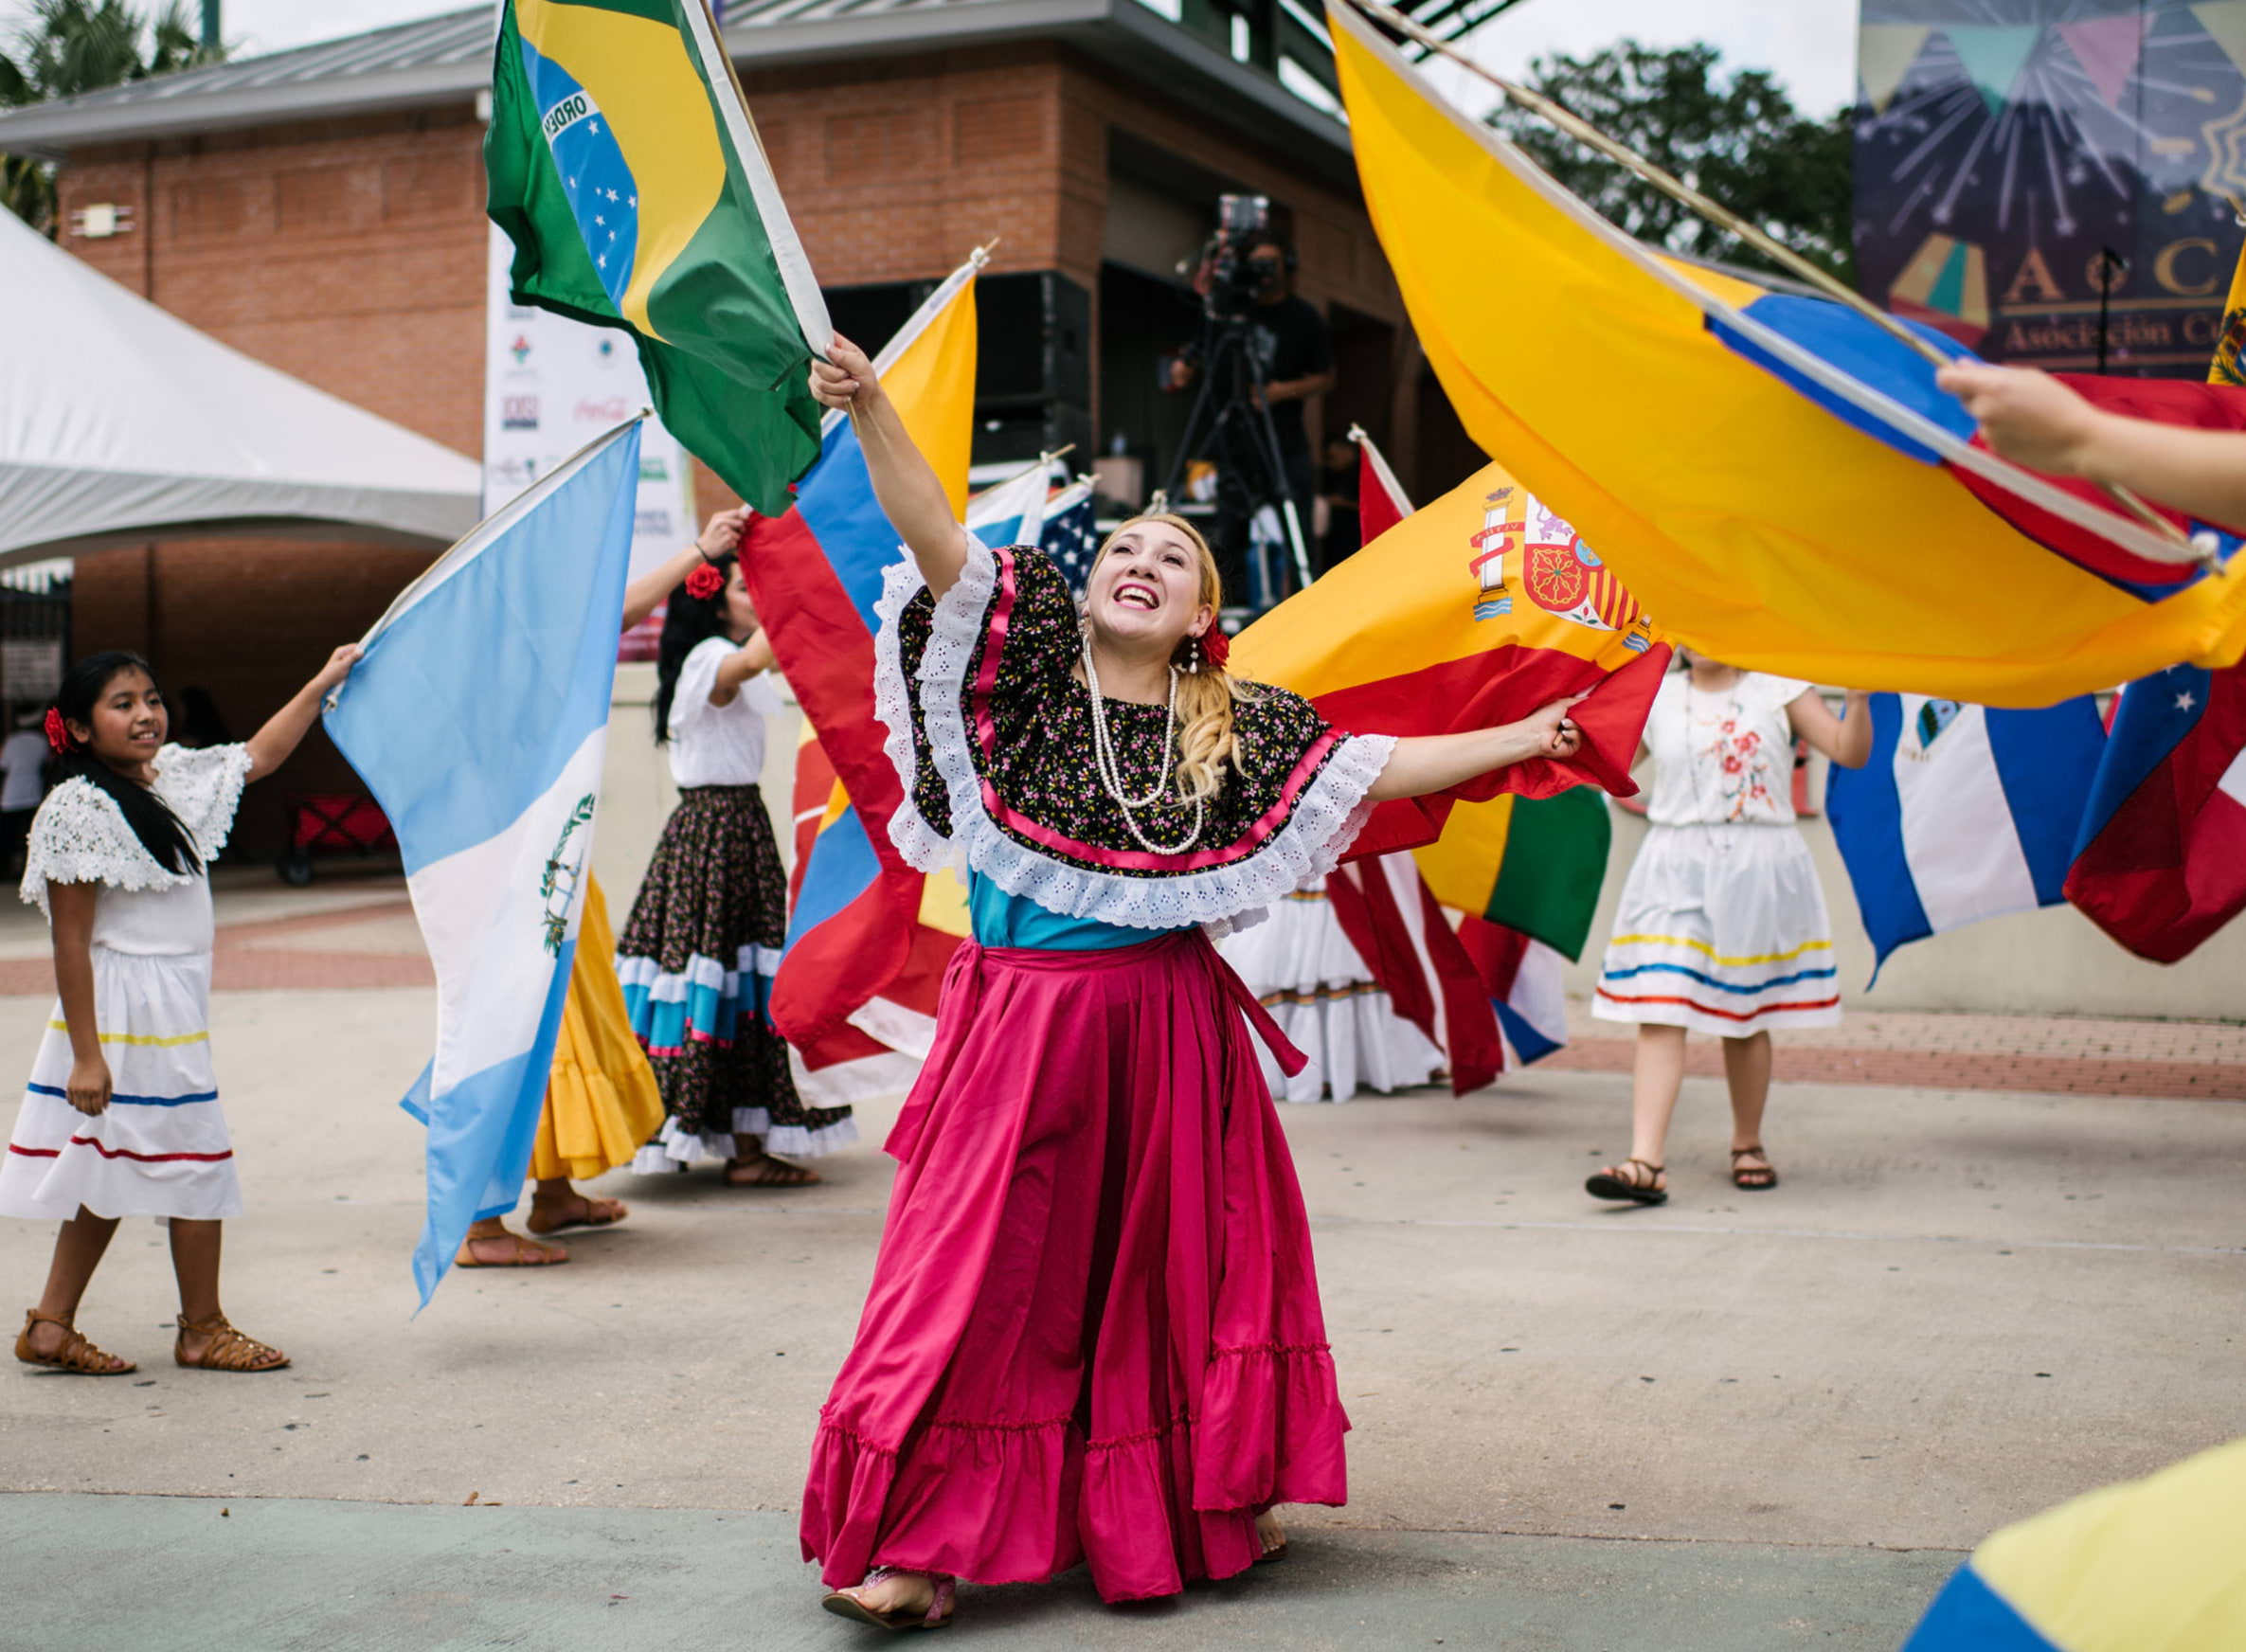 Foto: Pressbild/Latin Village Festival